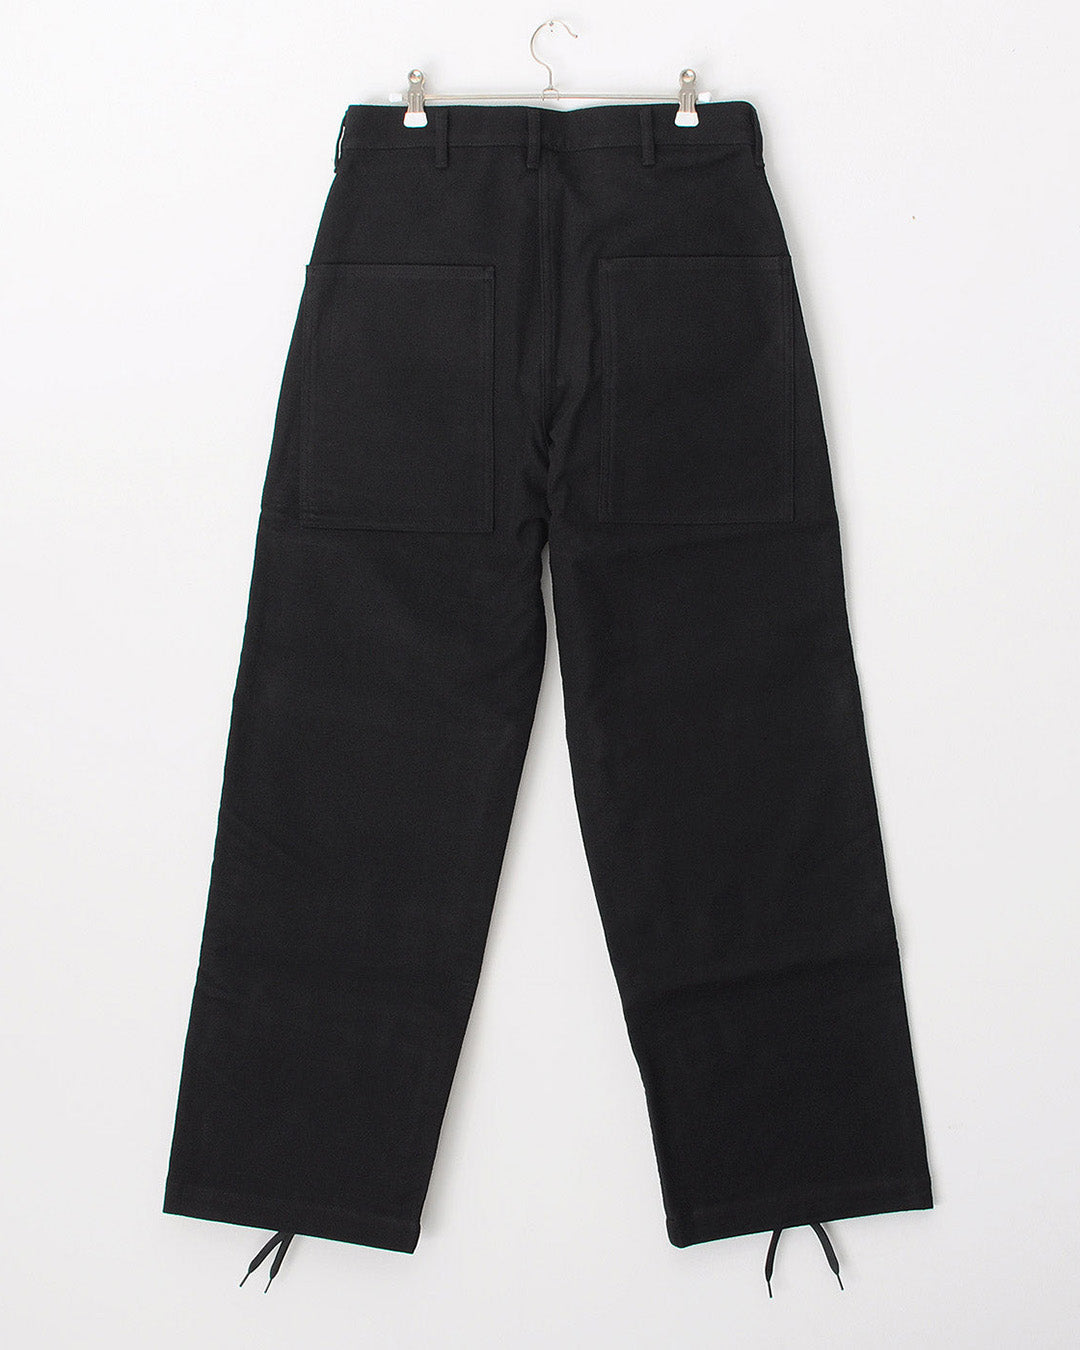 TUKI double knee pants / black / cotton melton【正規通販店】 – bollard